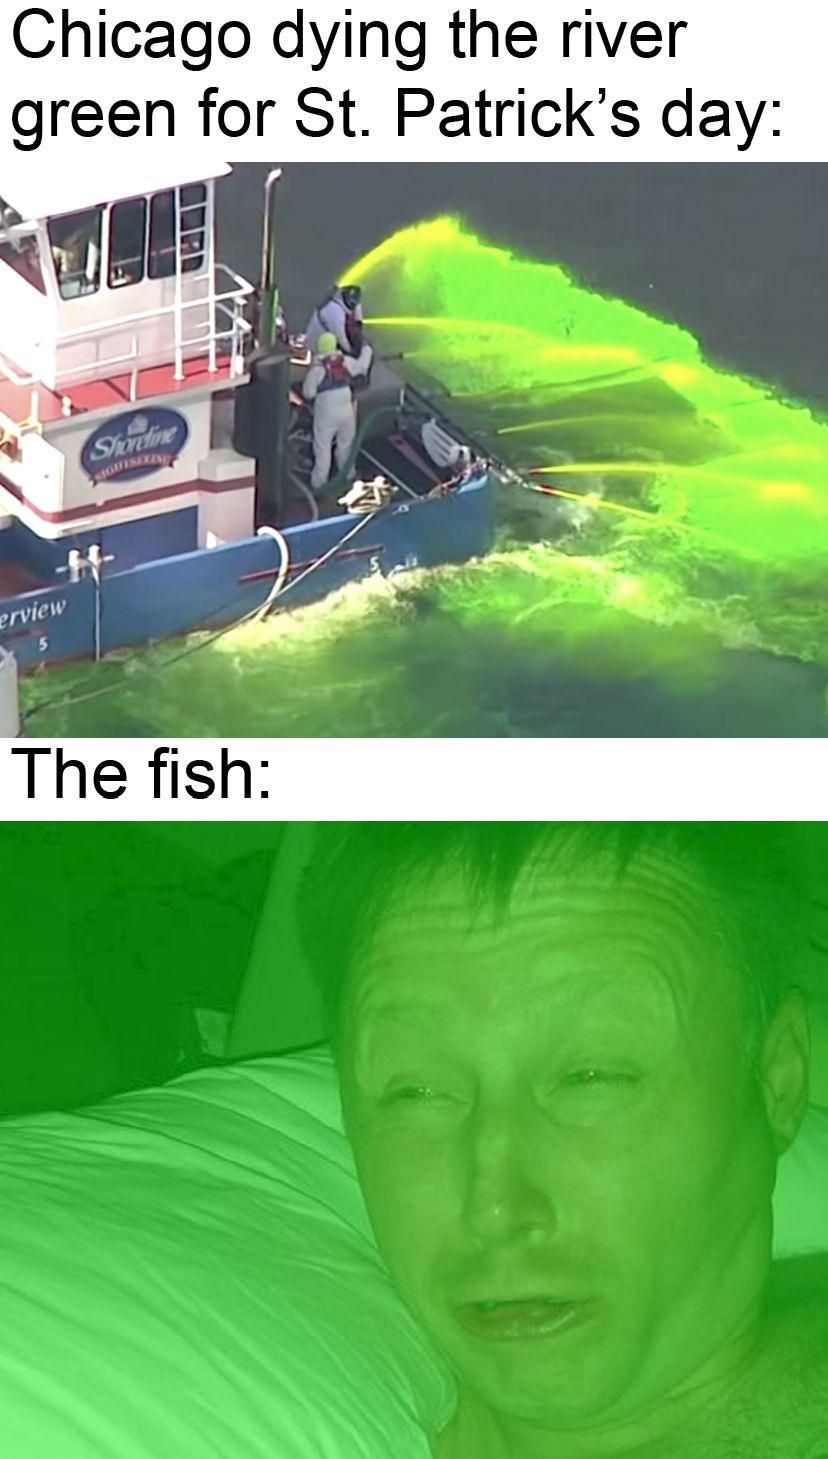 *** them fish